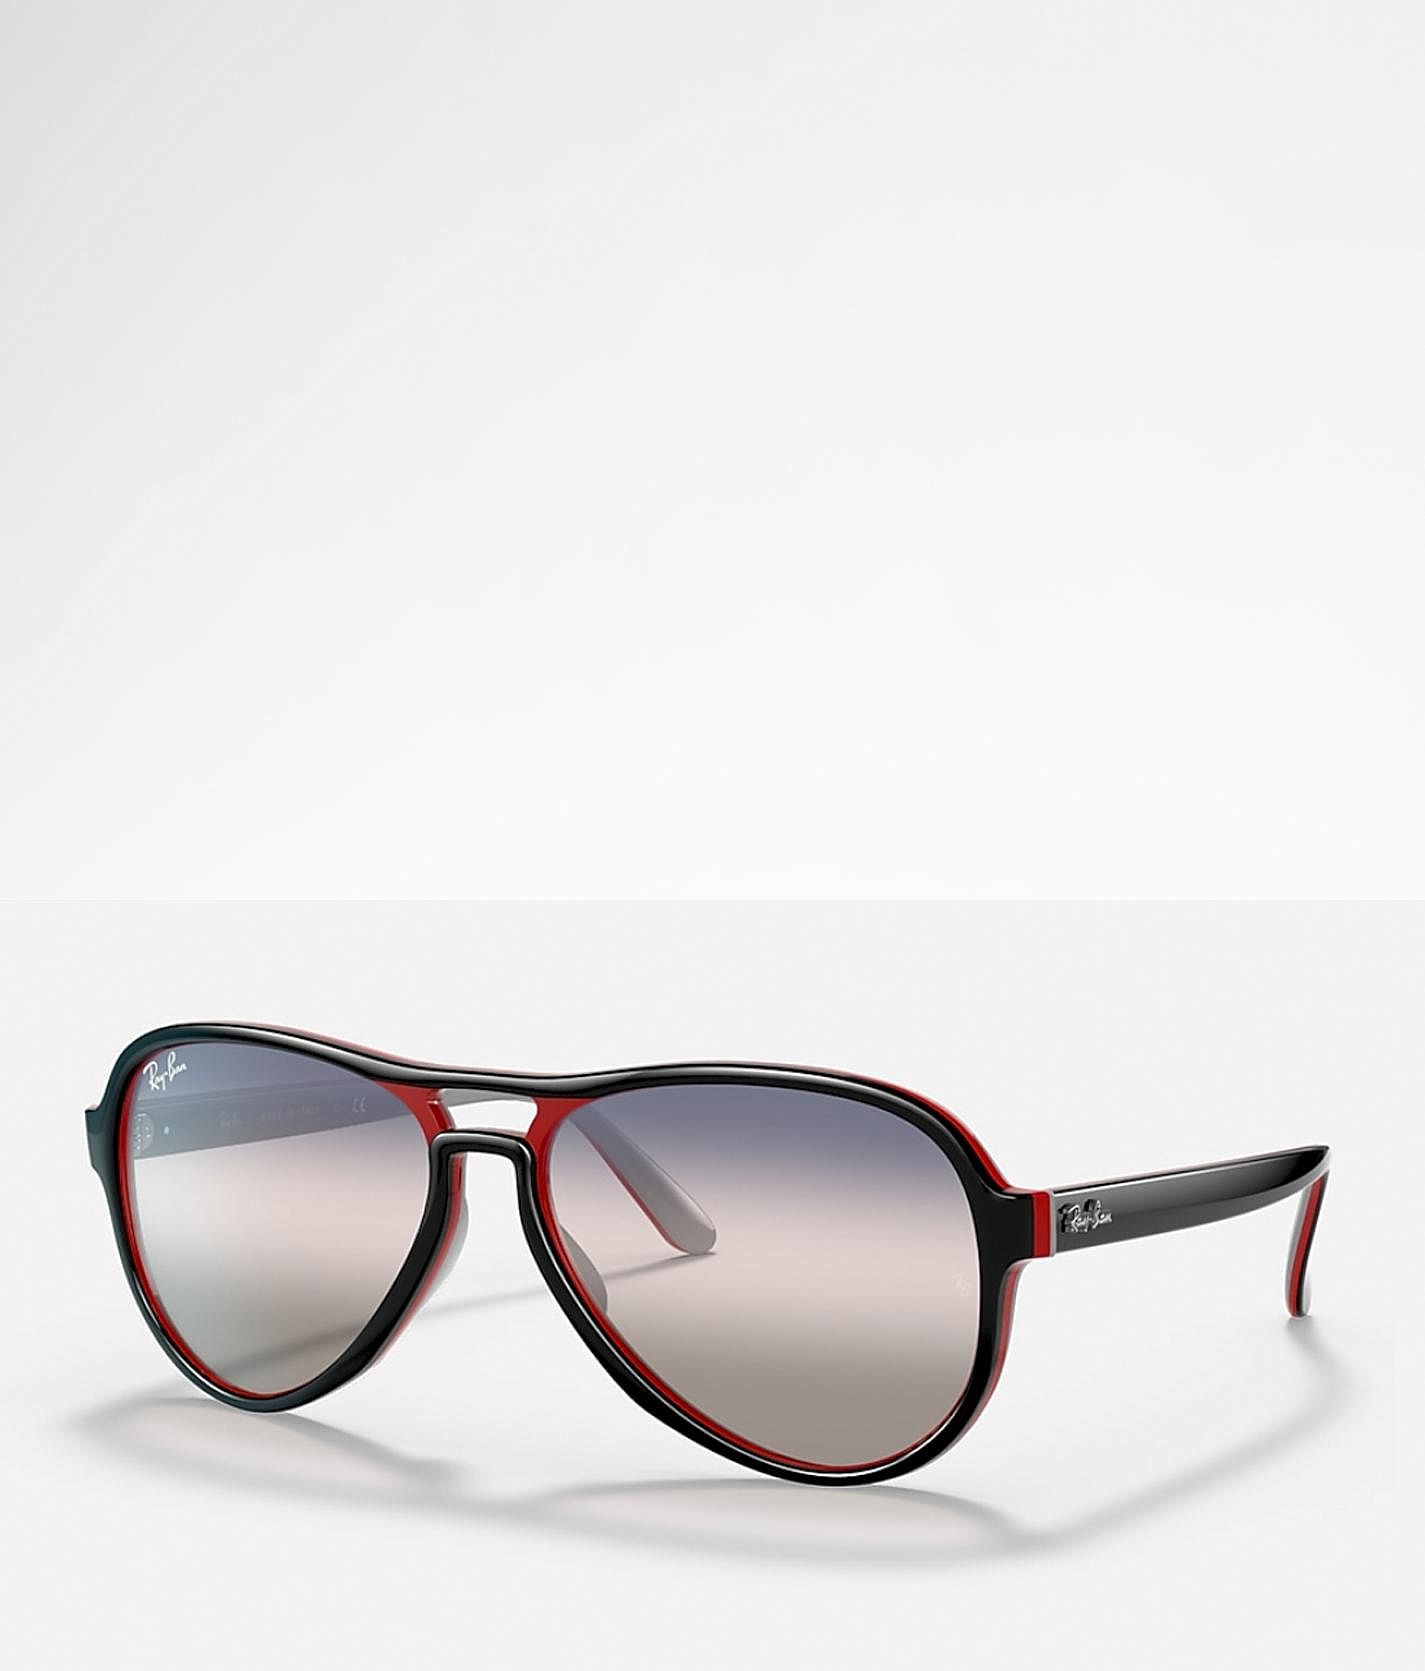 Ray-Ban® Vagabond Sunglasses - Women's Sunglasses & Glasses in Black Red  Light Grey | Buckle